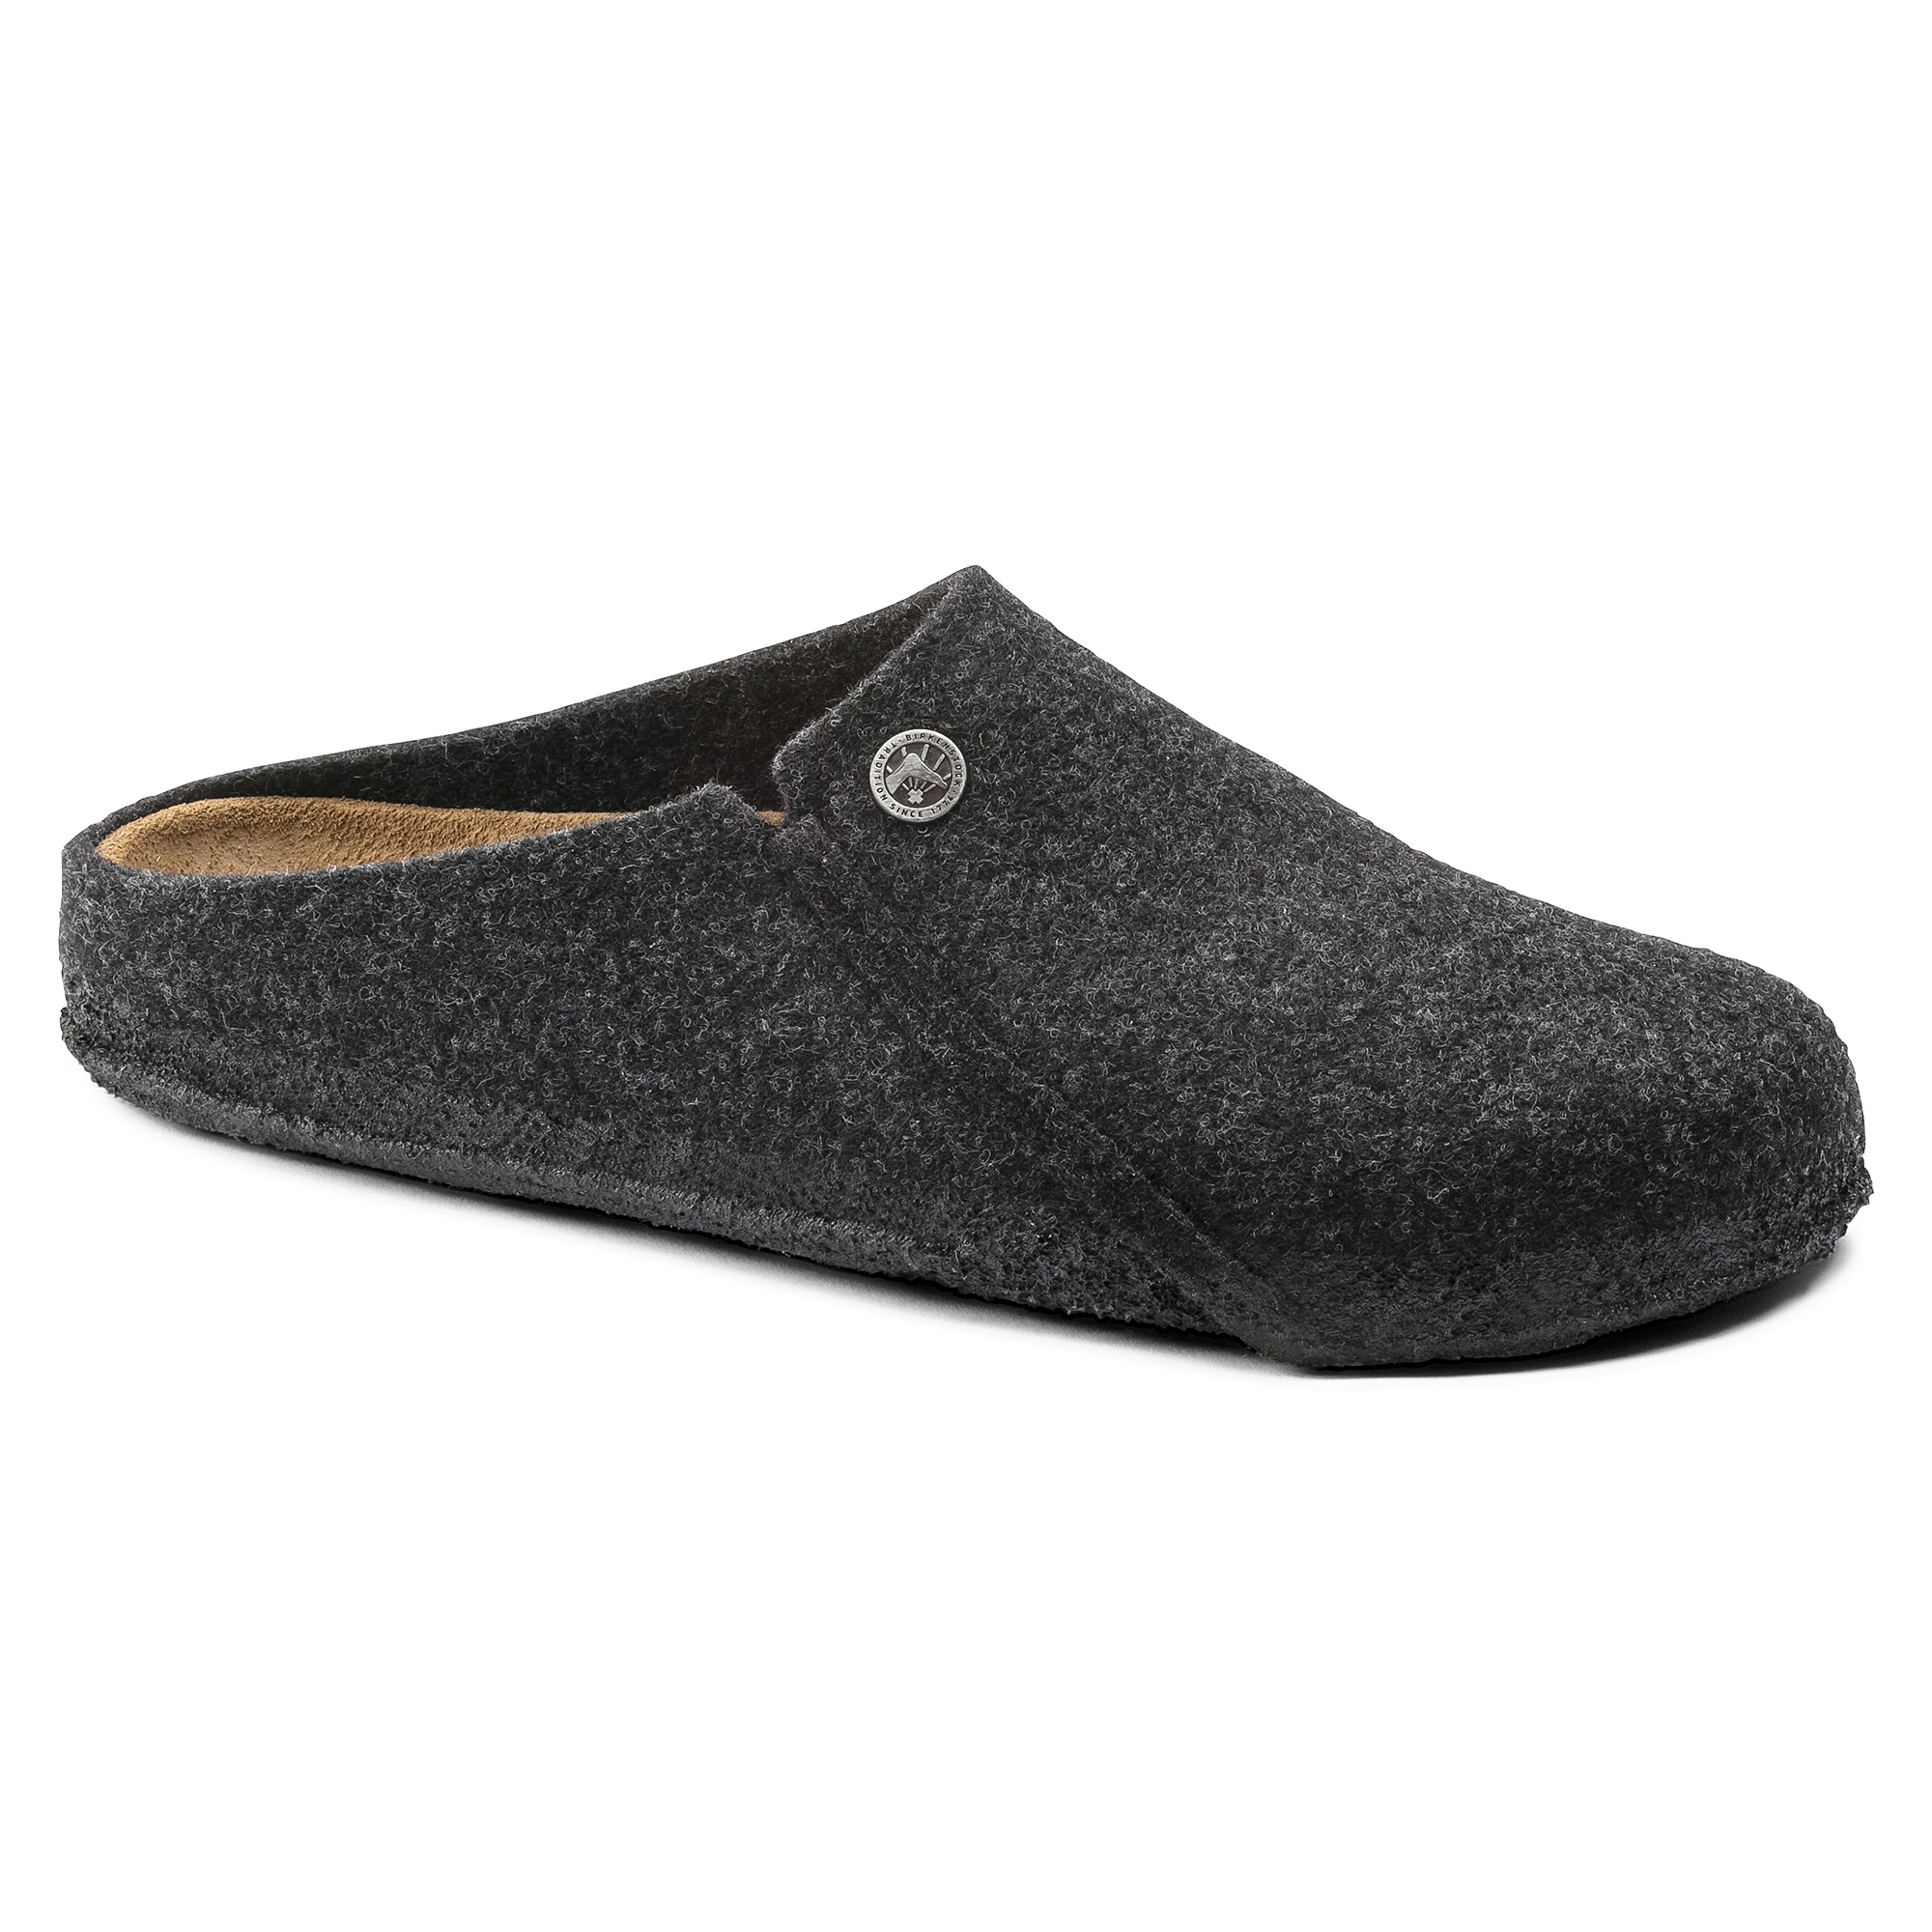 birkenstock slippers uk